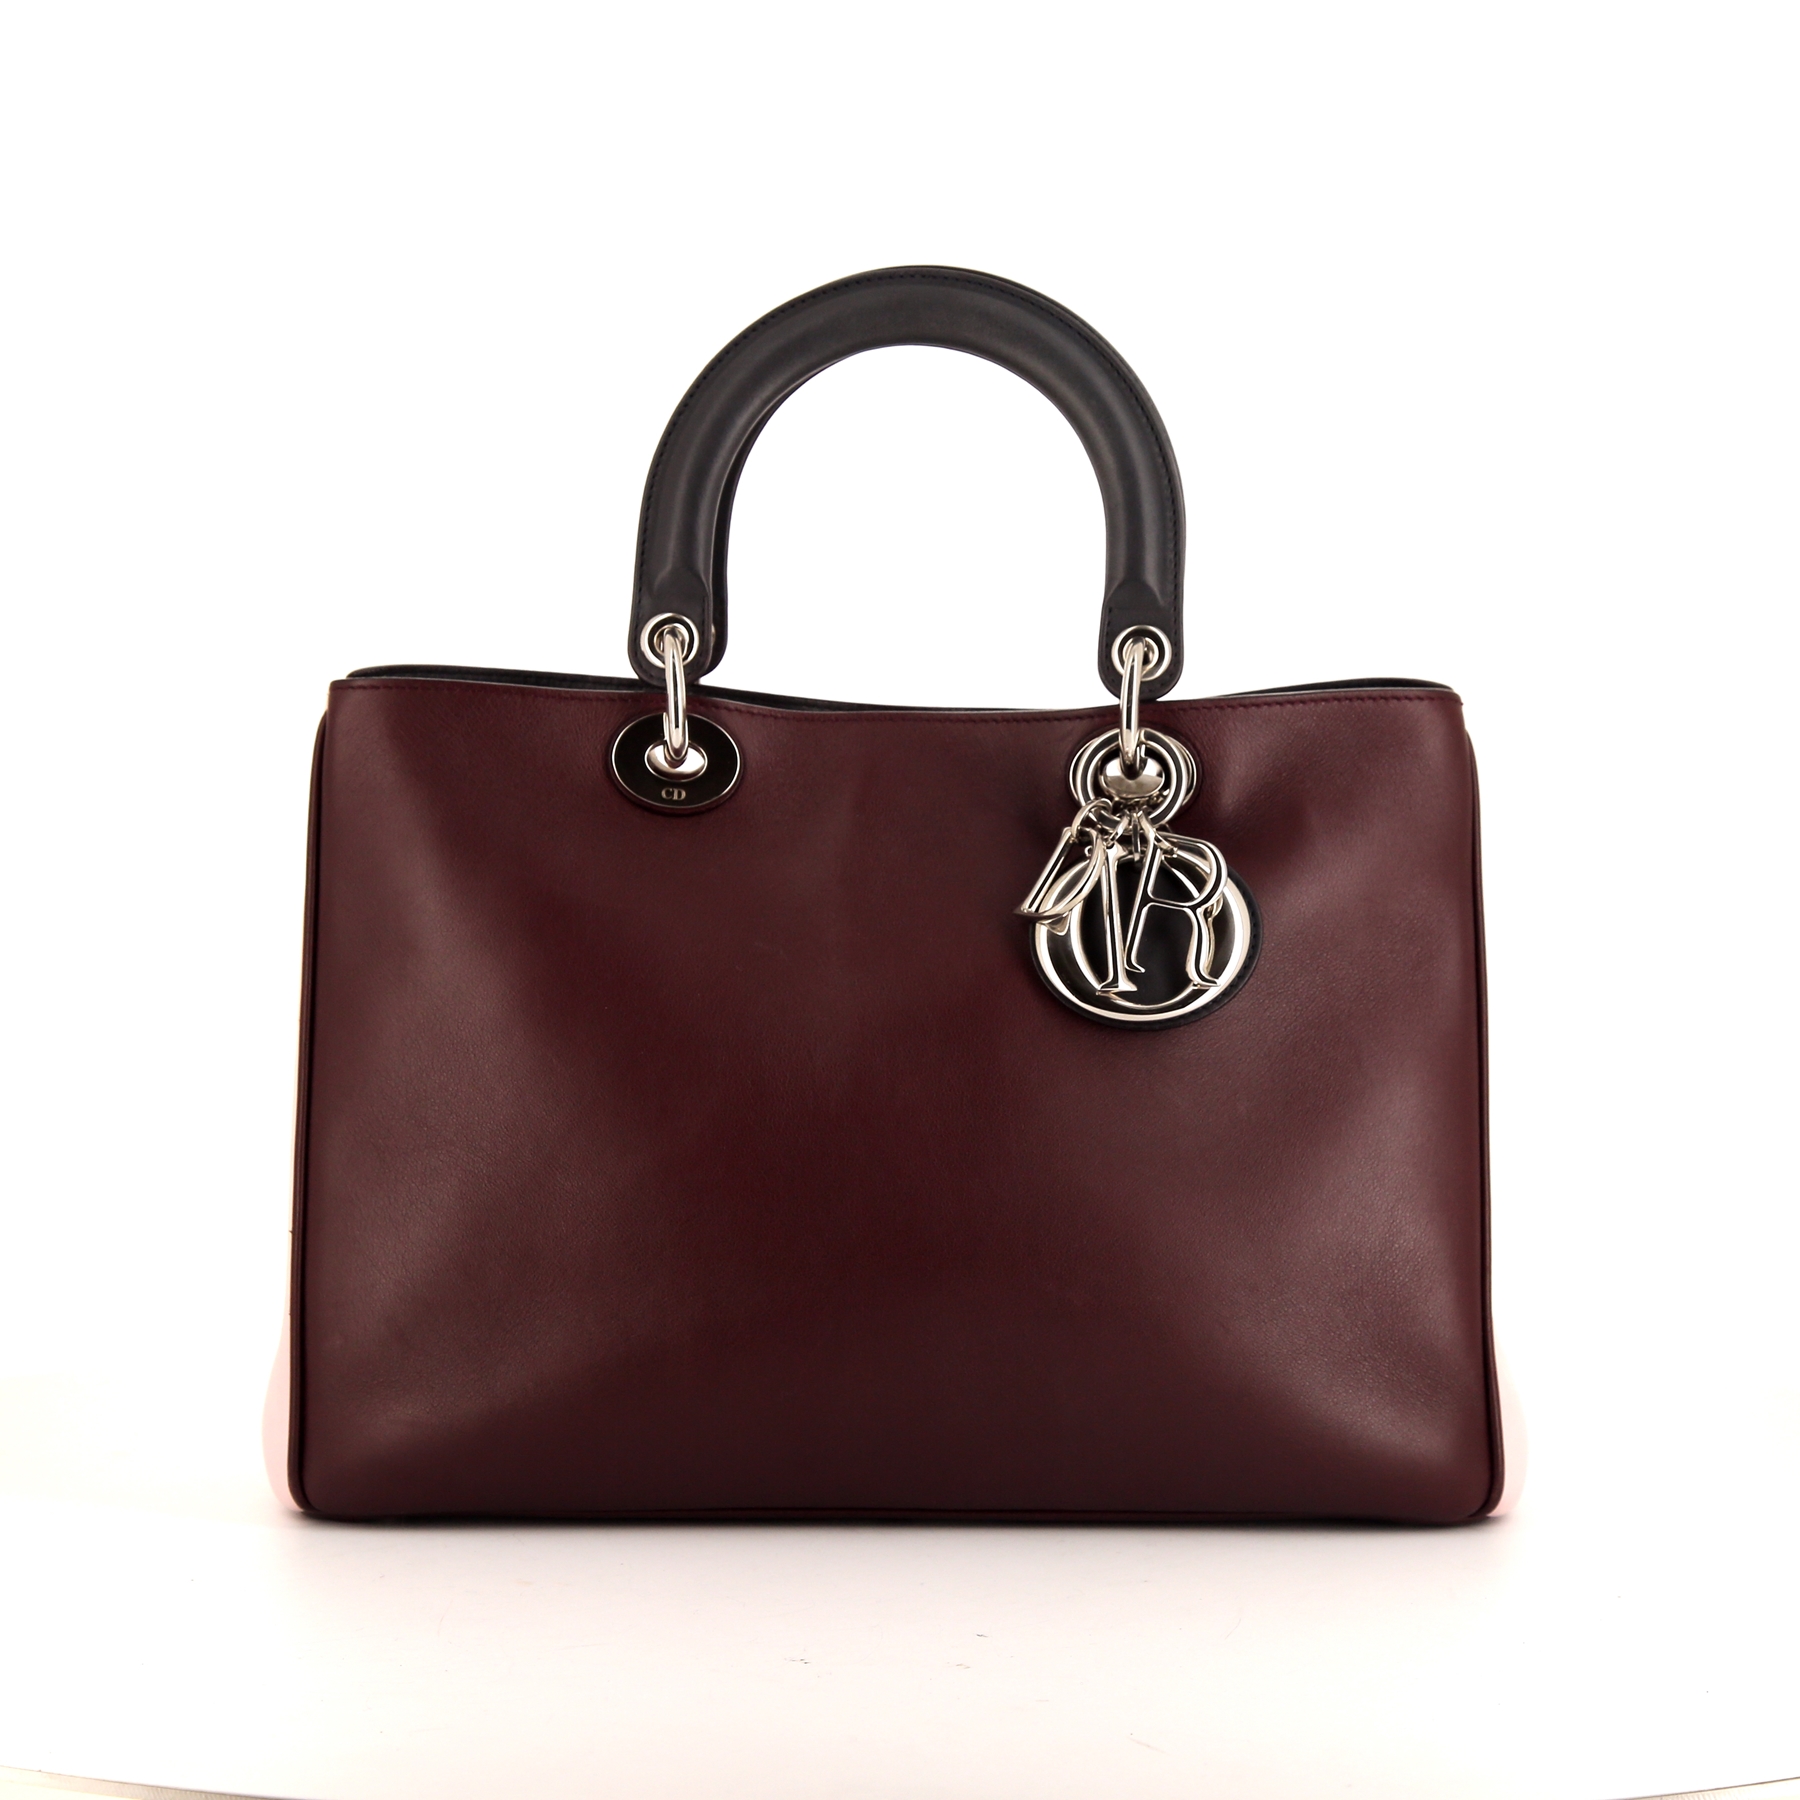 Diorissimo Medium Model Shopping Bag In Burgundy, Pink And Black